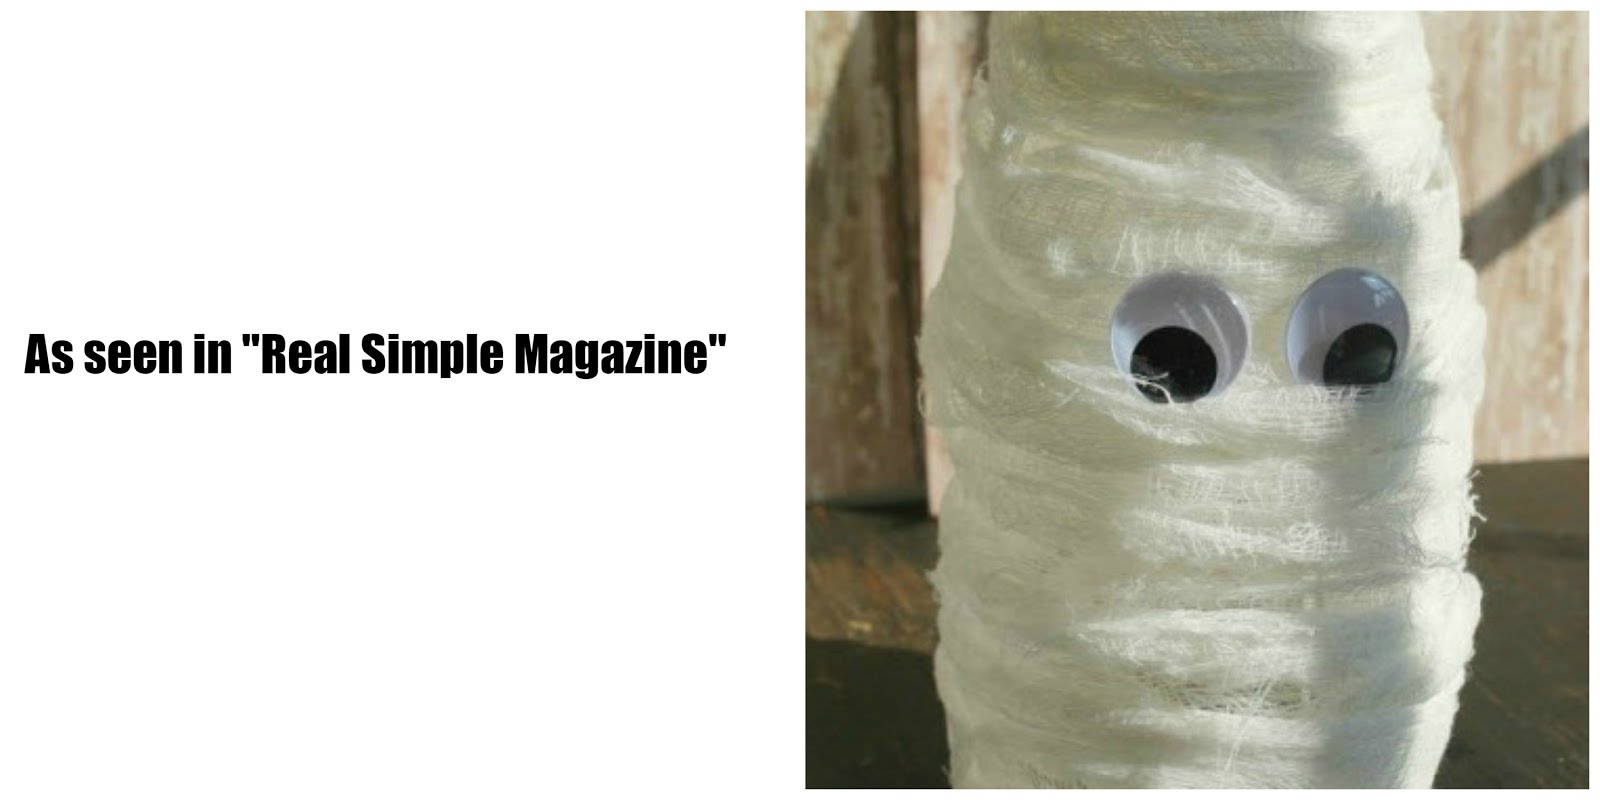 Real Simple Magazine